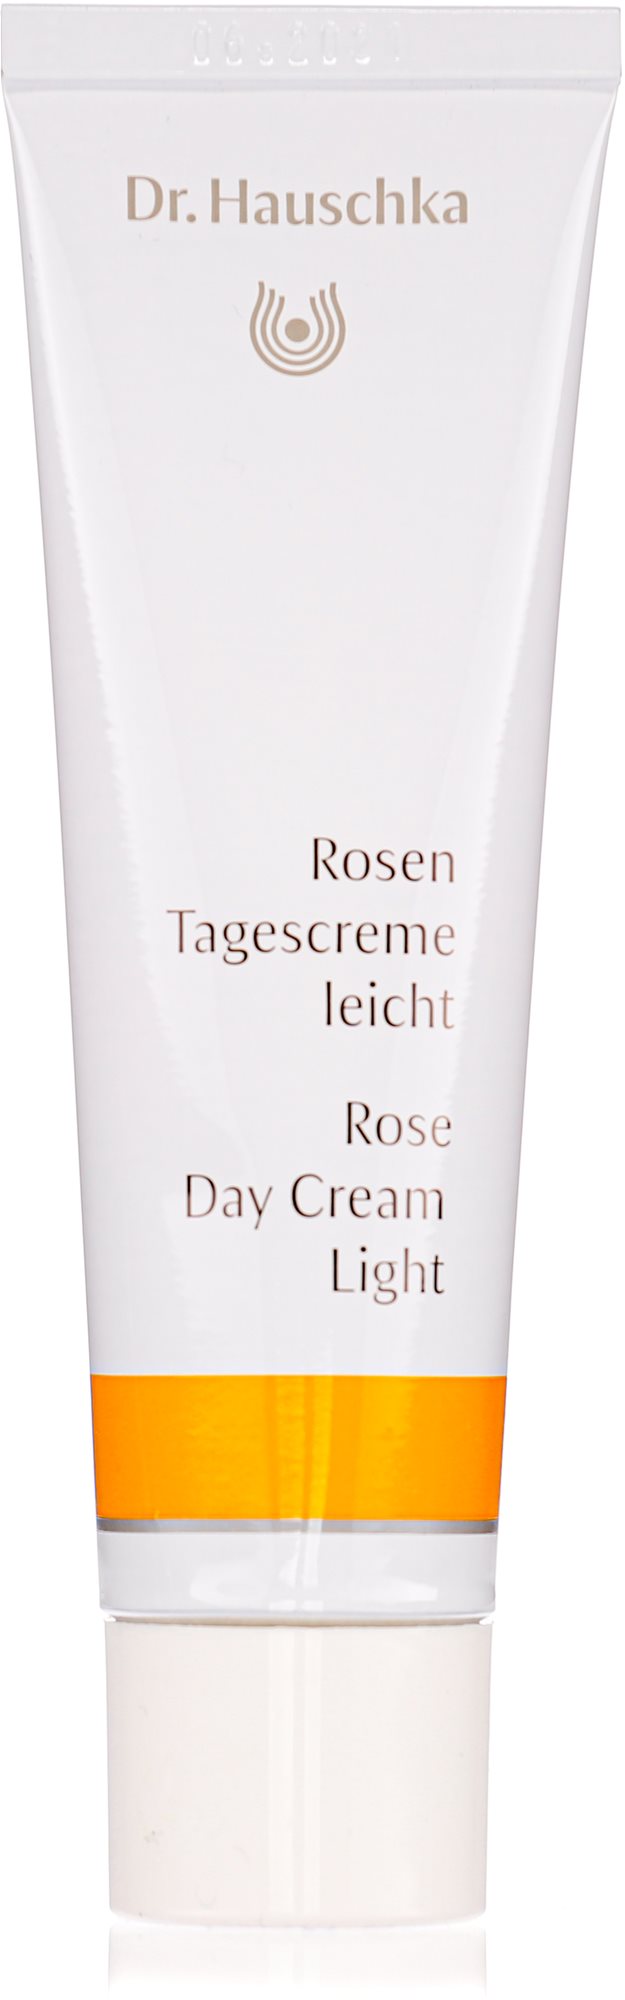 DR. HAUSCHKA Rose Day Cream Light 30 ml